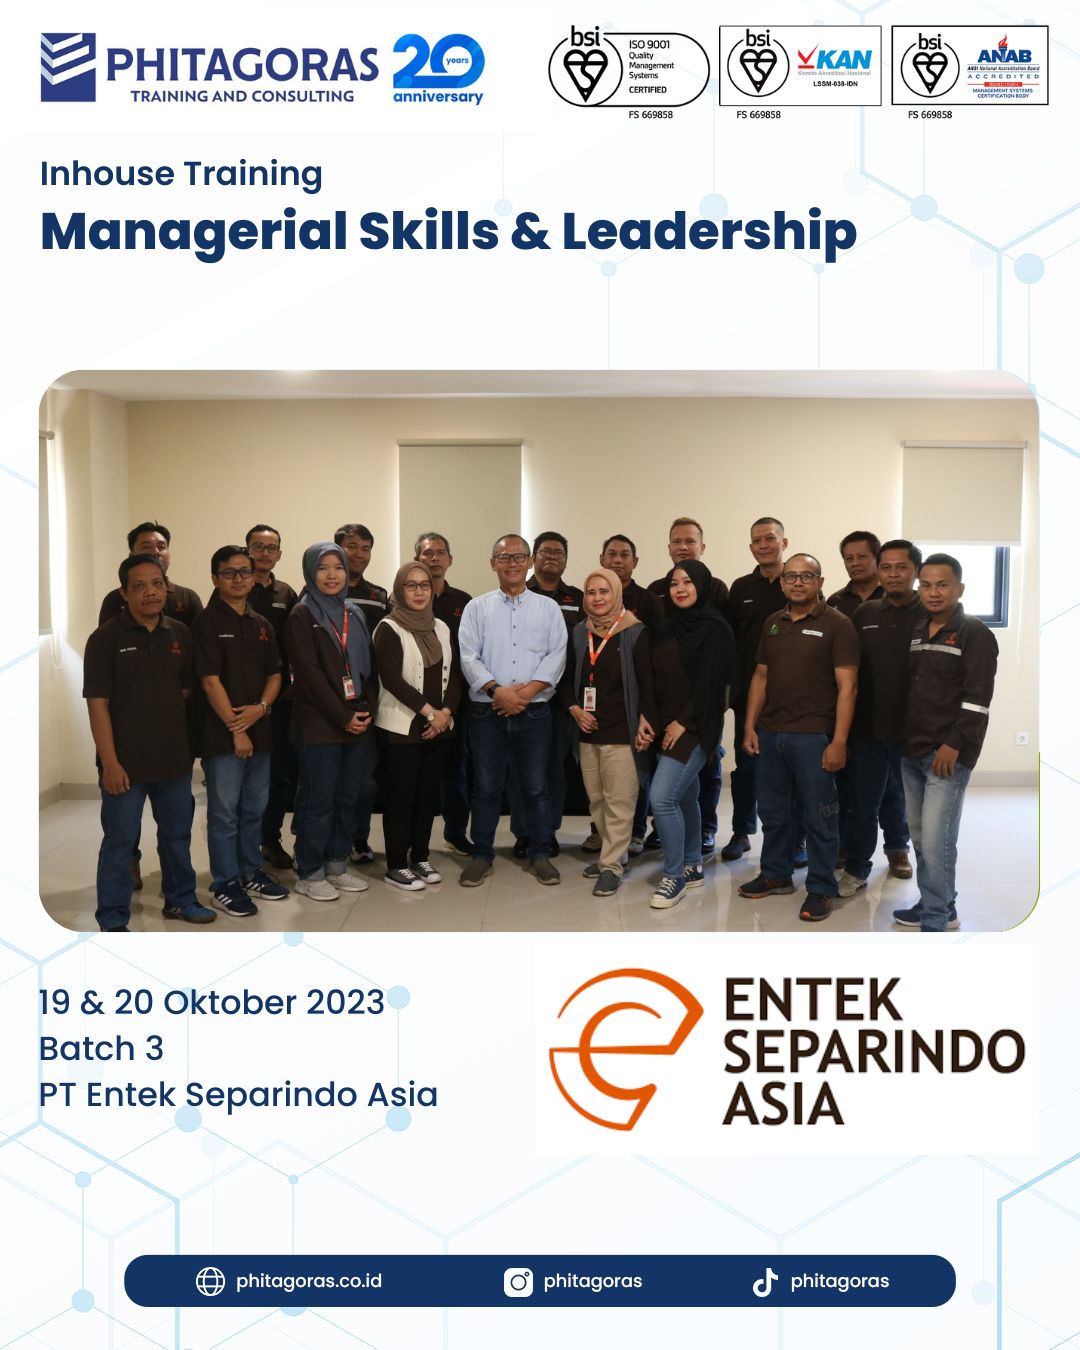 Inhouse Training Managerial Skills & Leadership - PT Entek Separindo Asia Batch 3 di Diara Hotel Cileungsi